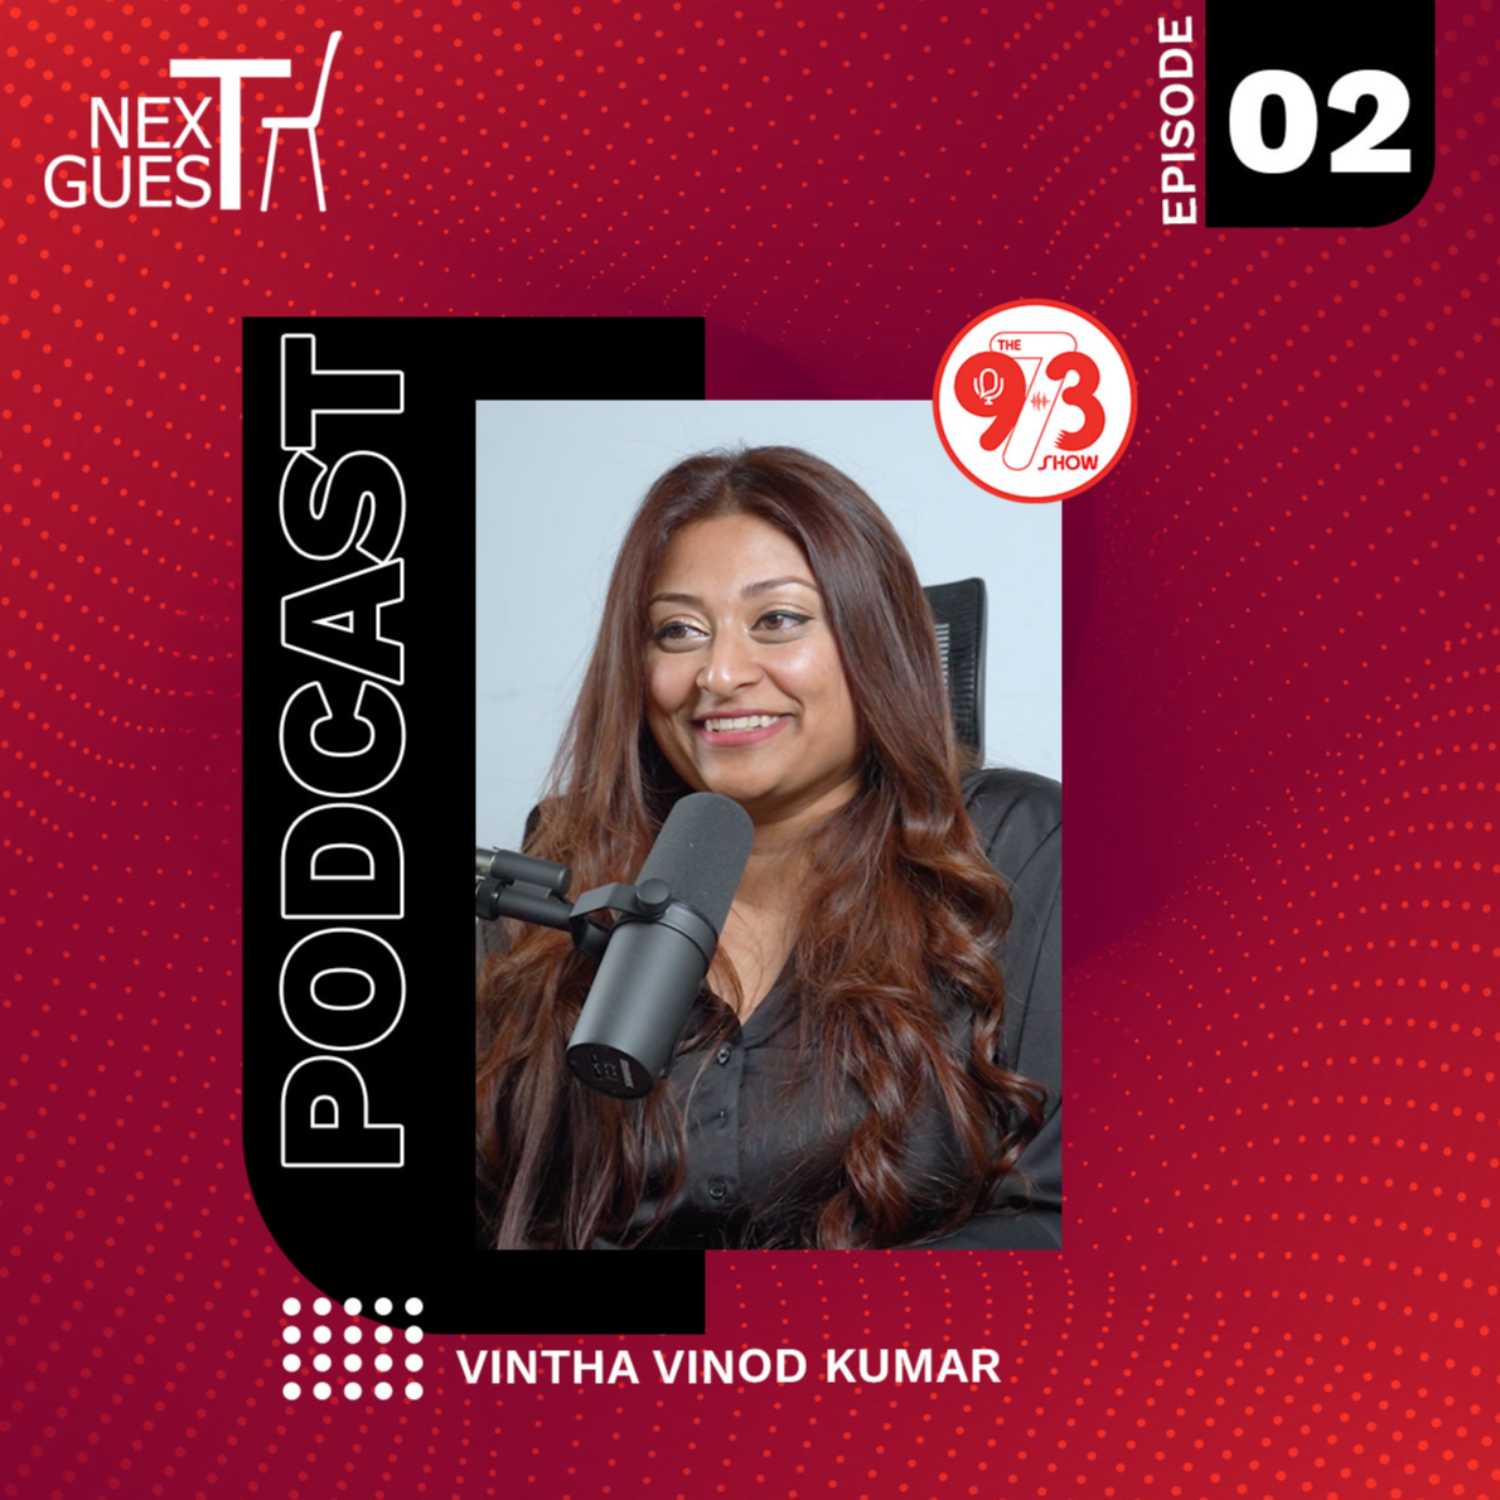 The Next Guest - EP 02 - VINTHA VINOD KUMAR